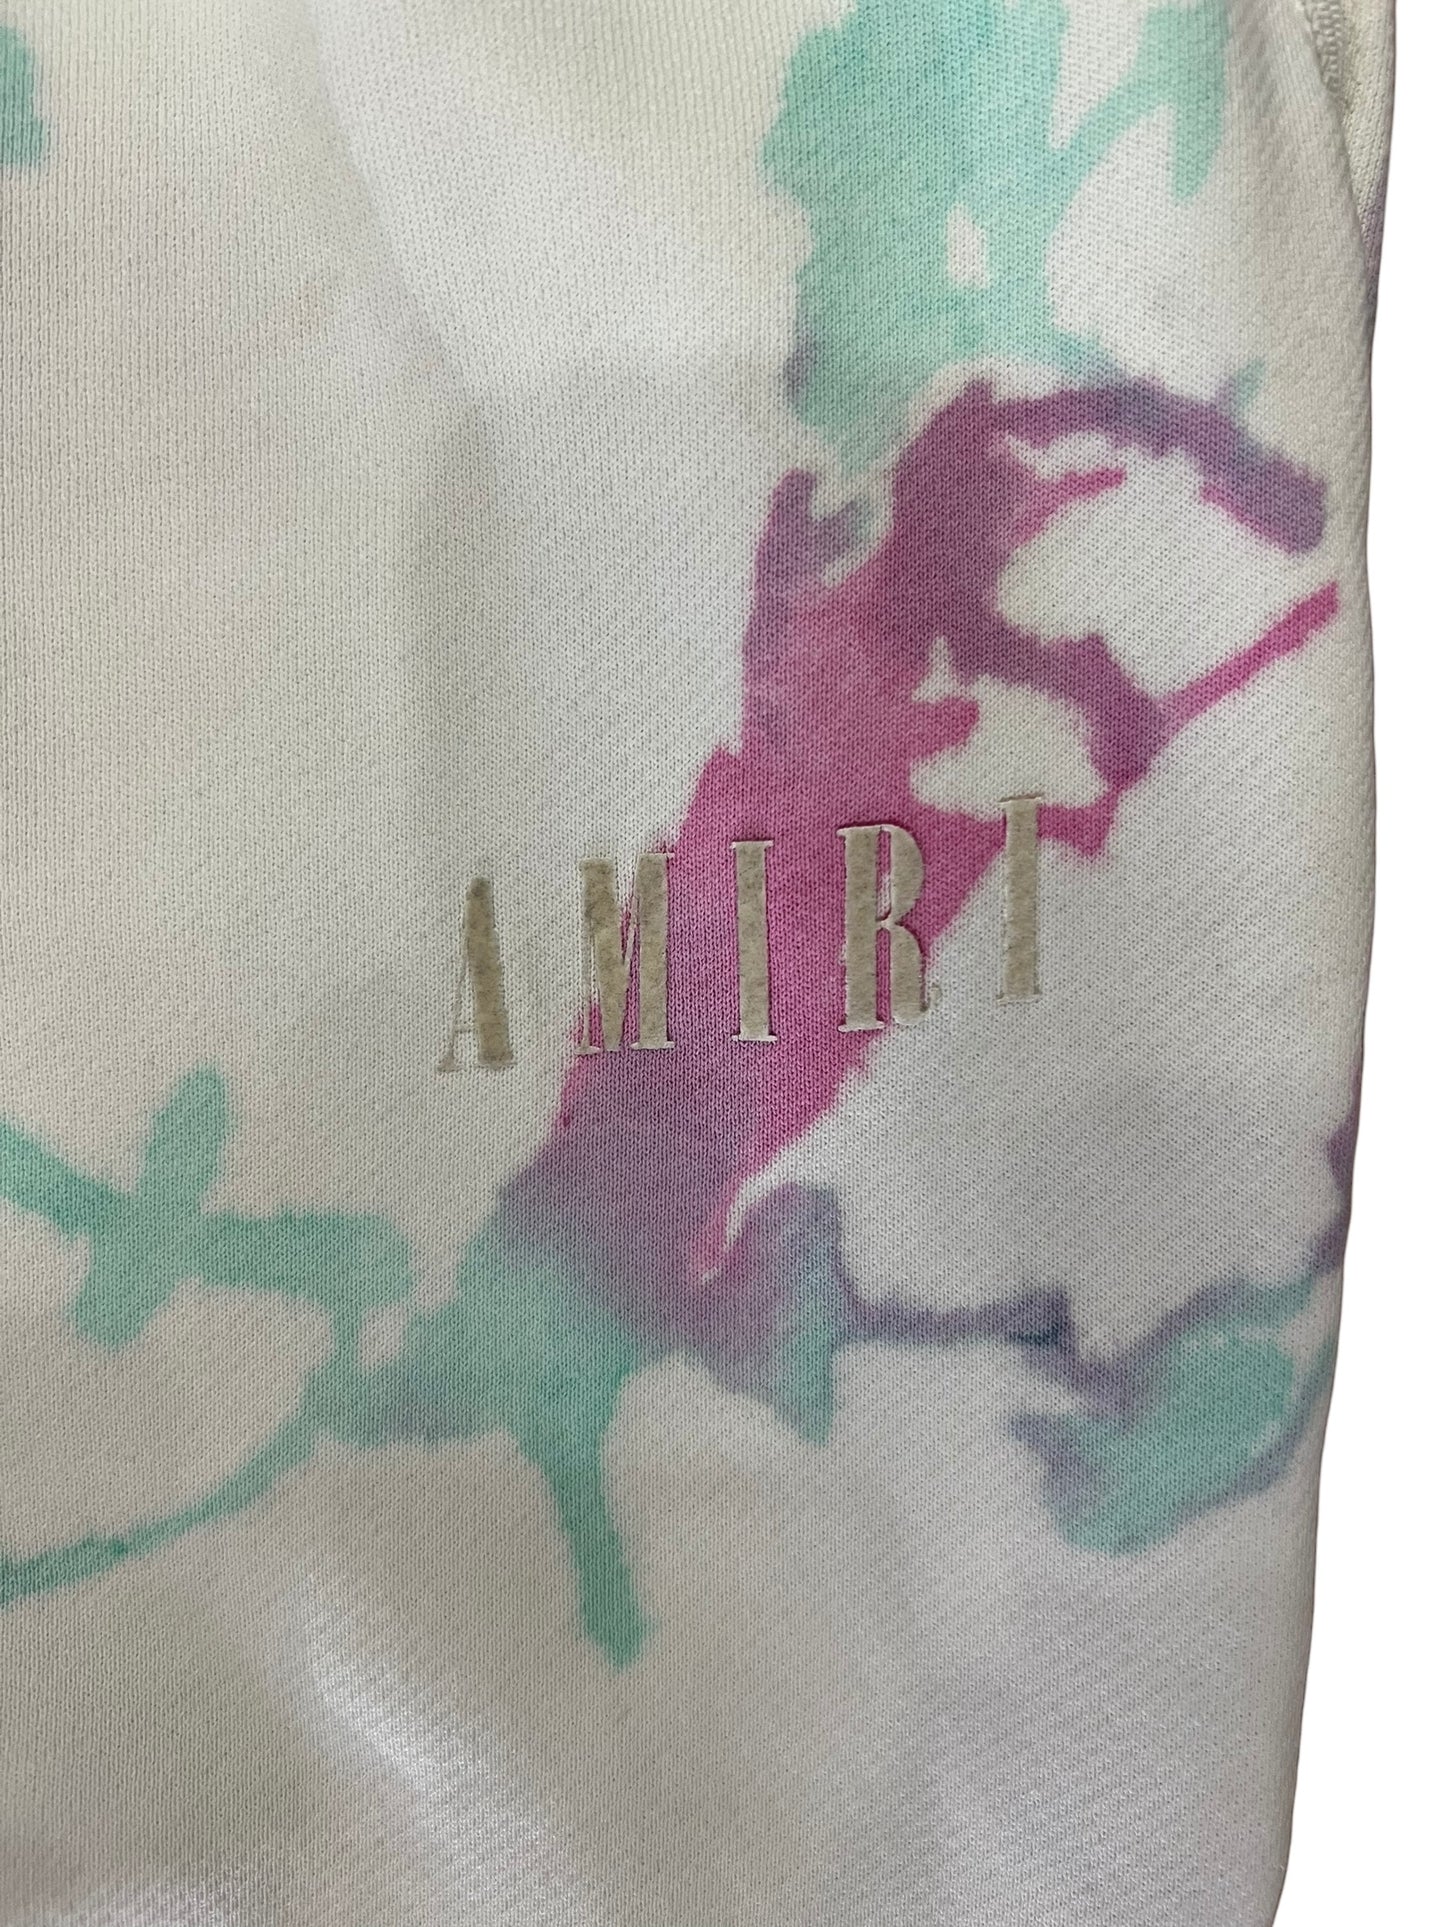 Amiri core Tie Dye Sweatpants size XS large pre-owned